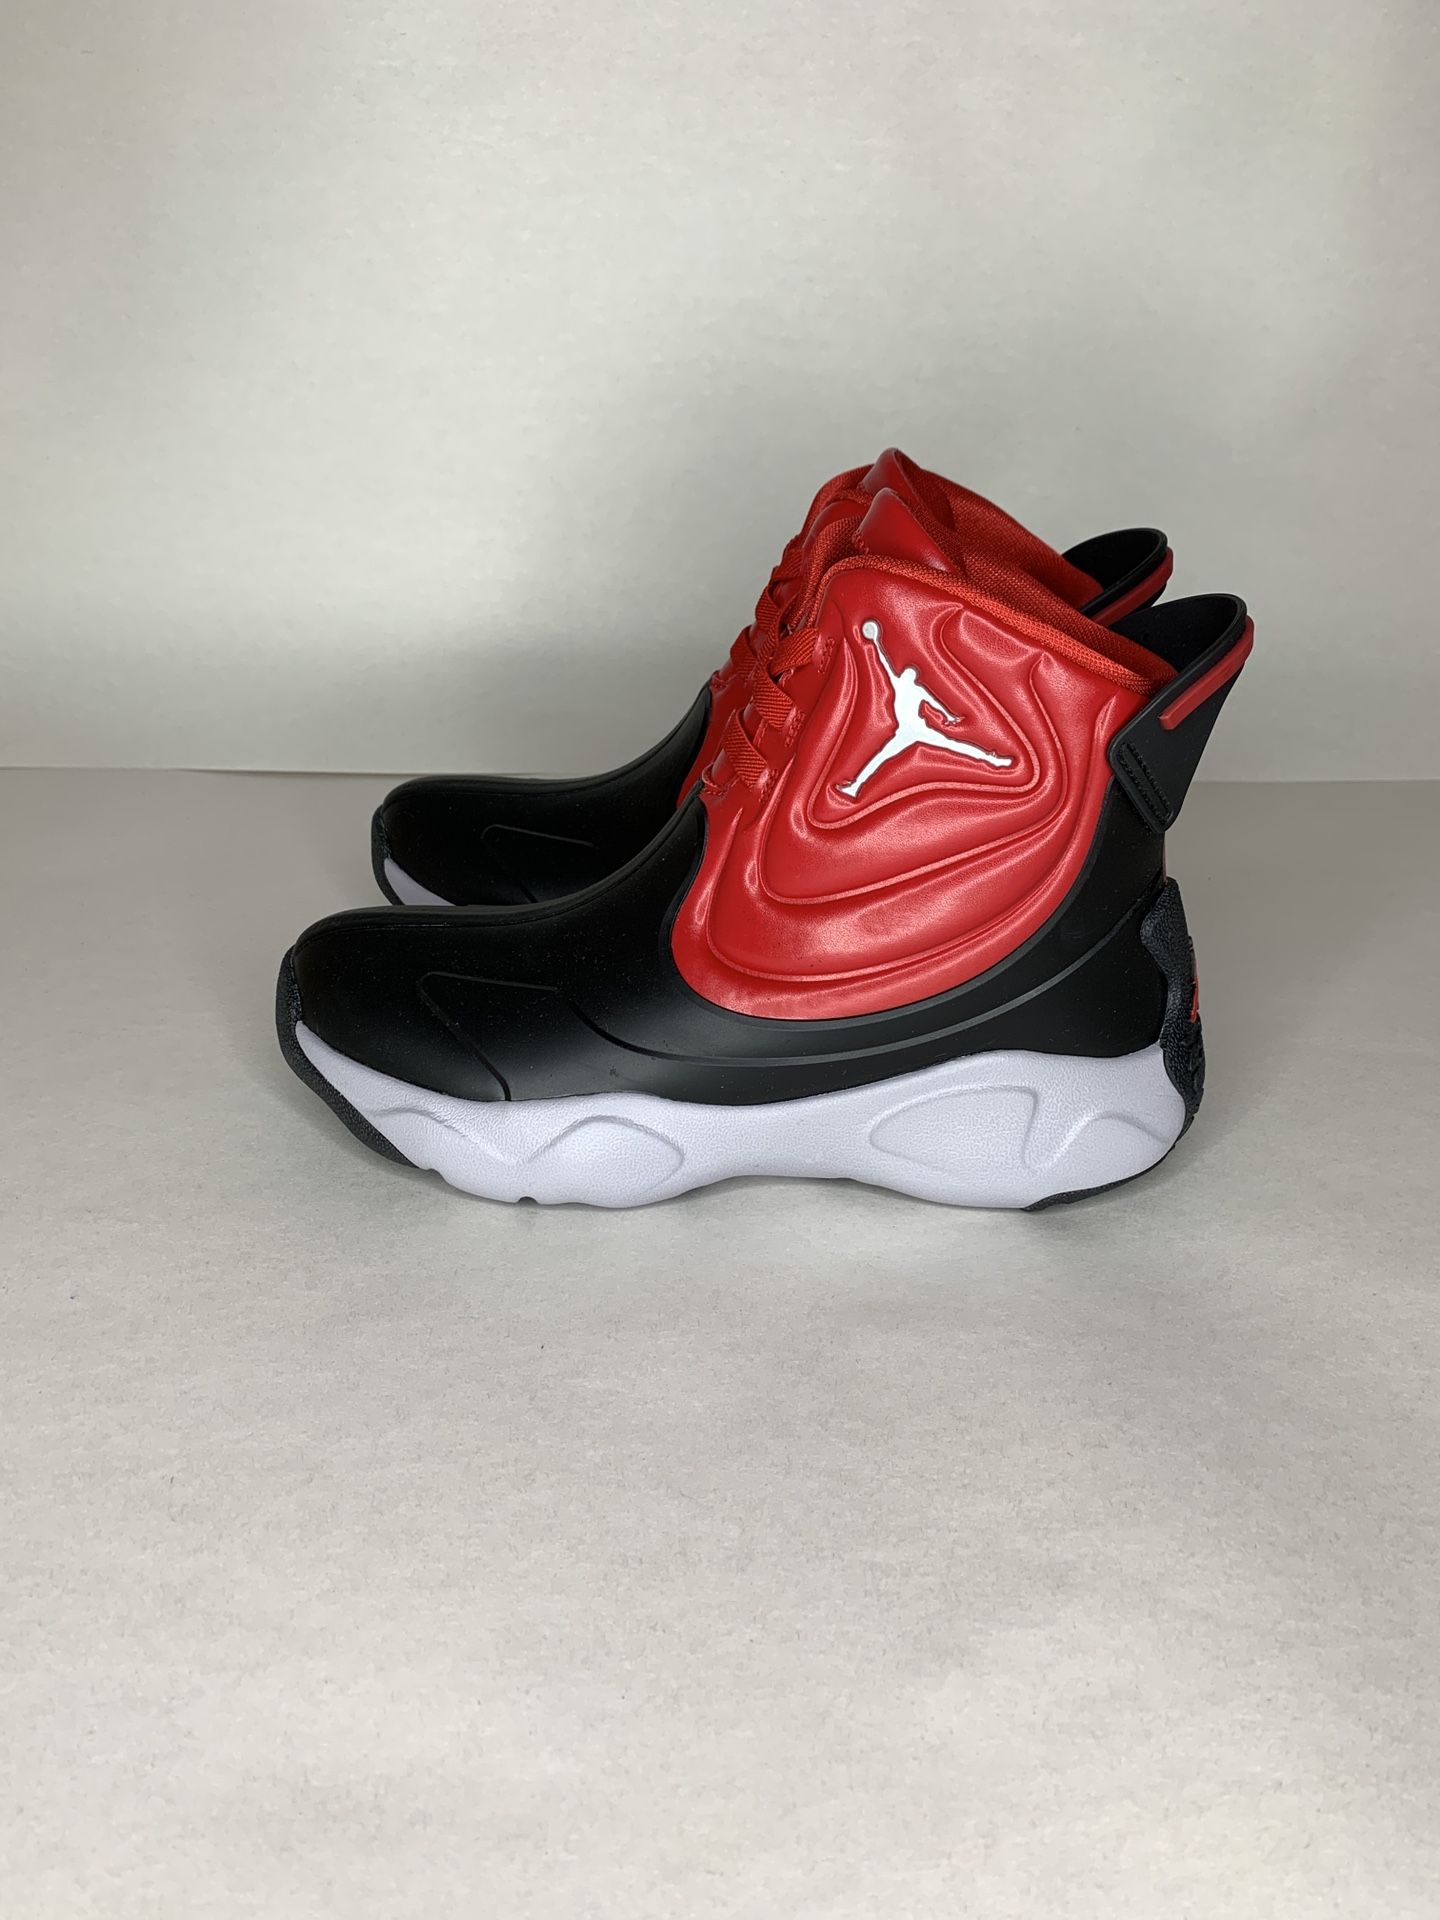 Nike Air Jordan Drip 23 Kids Size 3Y Rain  Boots CT5798-006 Black/Red.  NEW without original box.